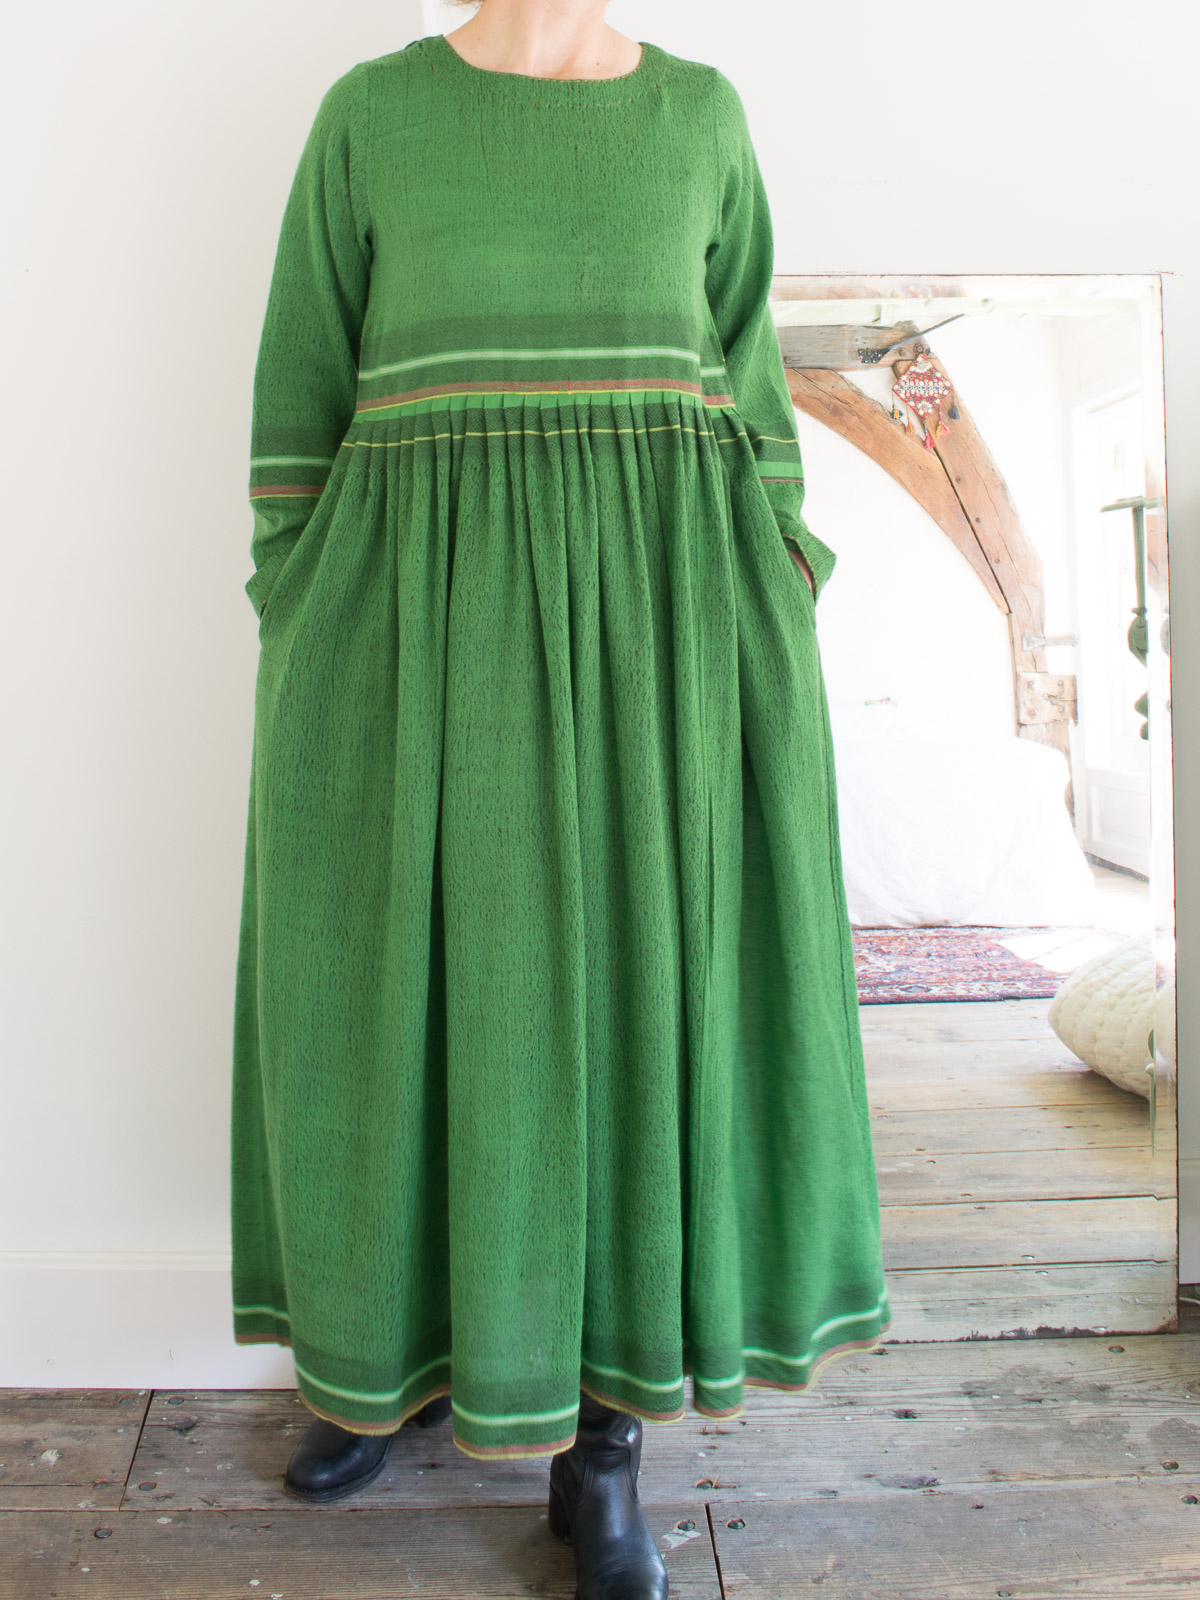 Onhandig viool Arabisch wijde maxi-jurk van groene wol - jurken en blouses - volledig handgemaakt -  kleding - Ottomania.nl | de officiële Ottomania website